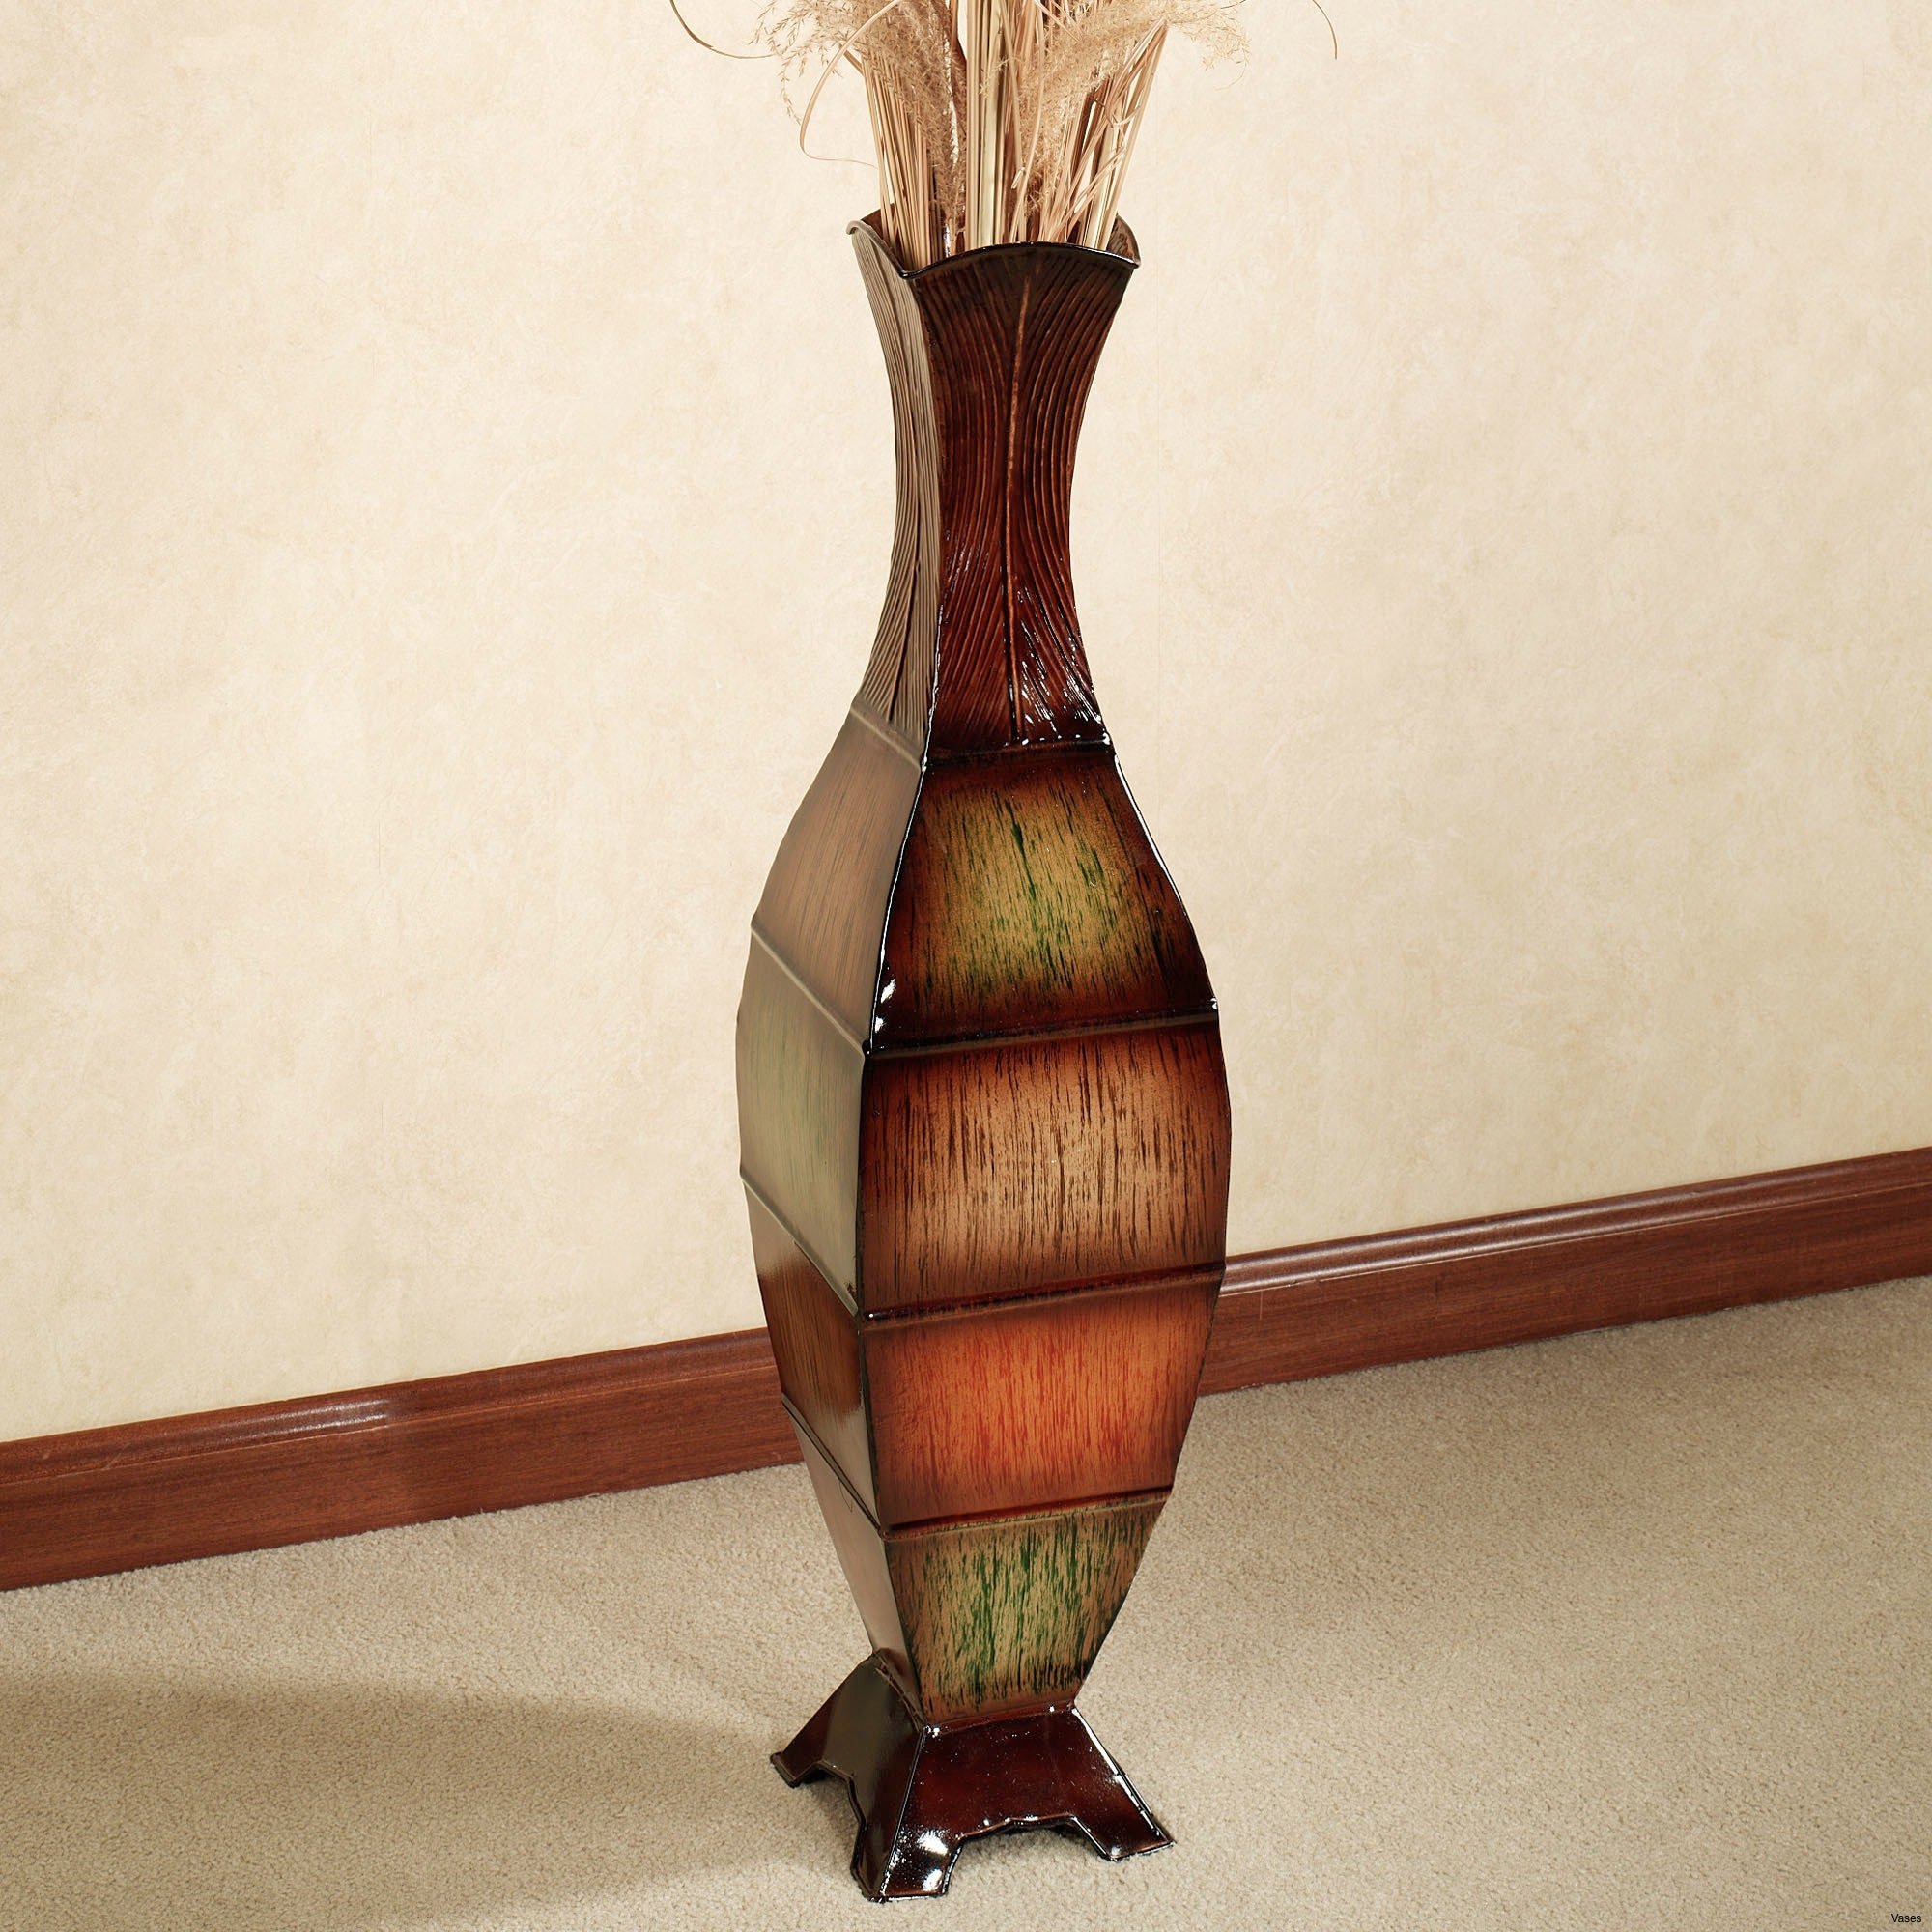 spun bamboo vase of 10 best of bamboo vase bogekompresorturkiye com for lamps floor contemporary new luxury contemporary floor vasesh vases cheap vasesi 5d bamboo lamps floor